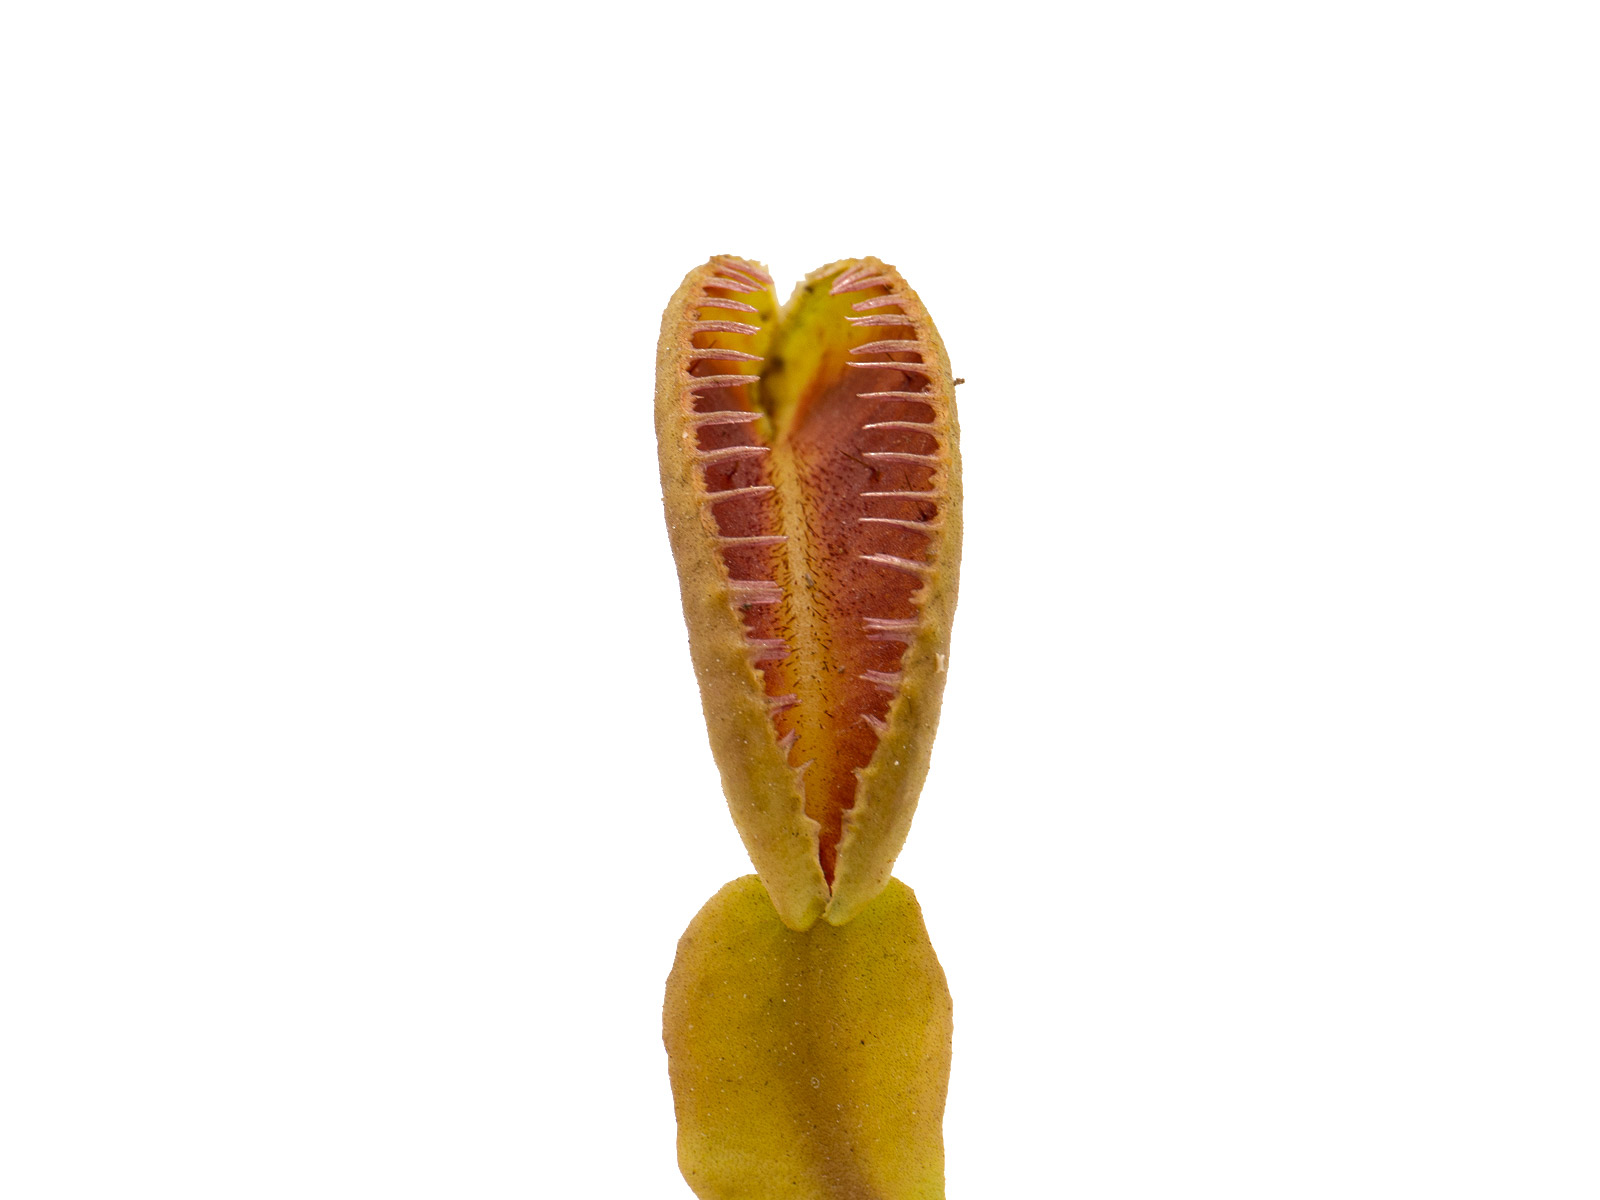 Dionaea muscipula - Alien